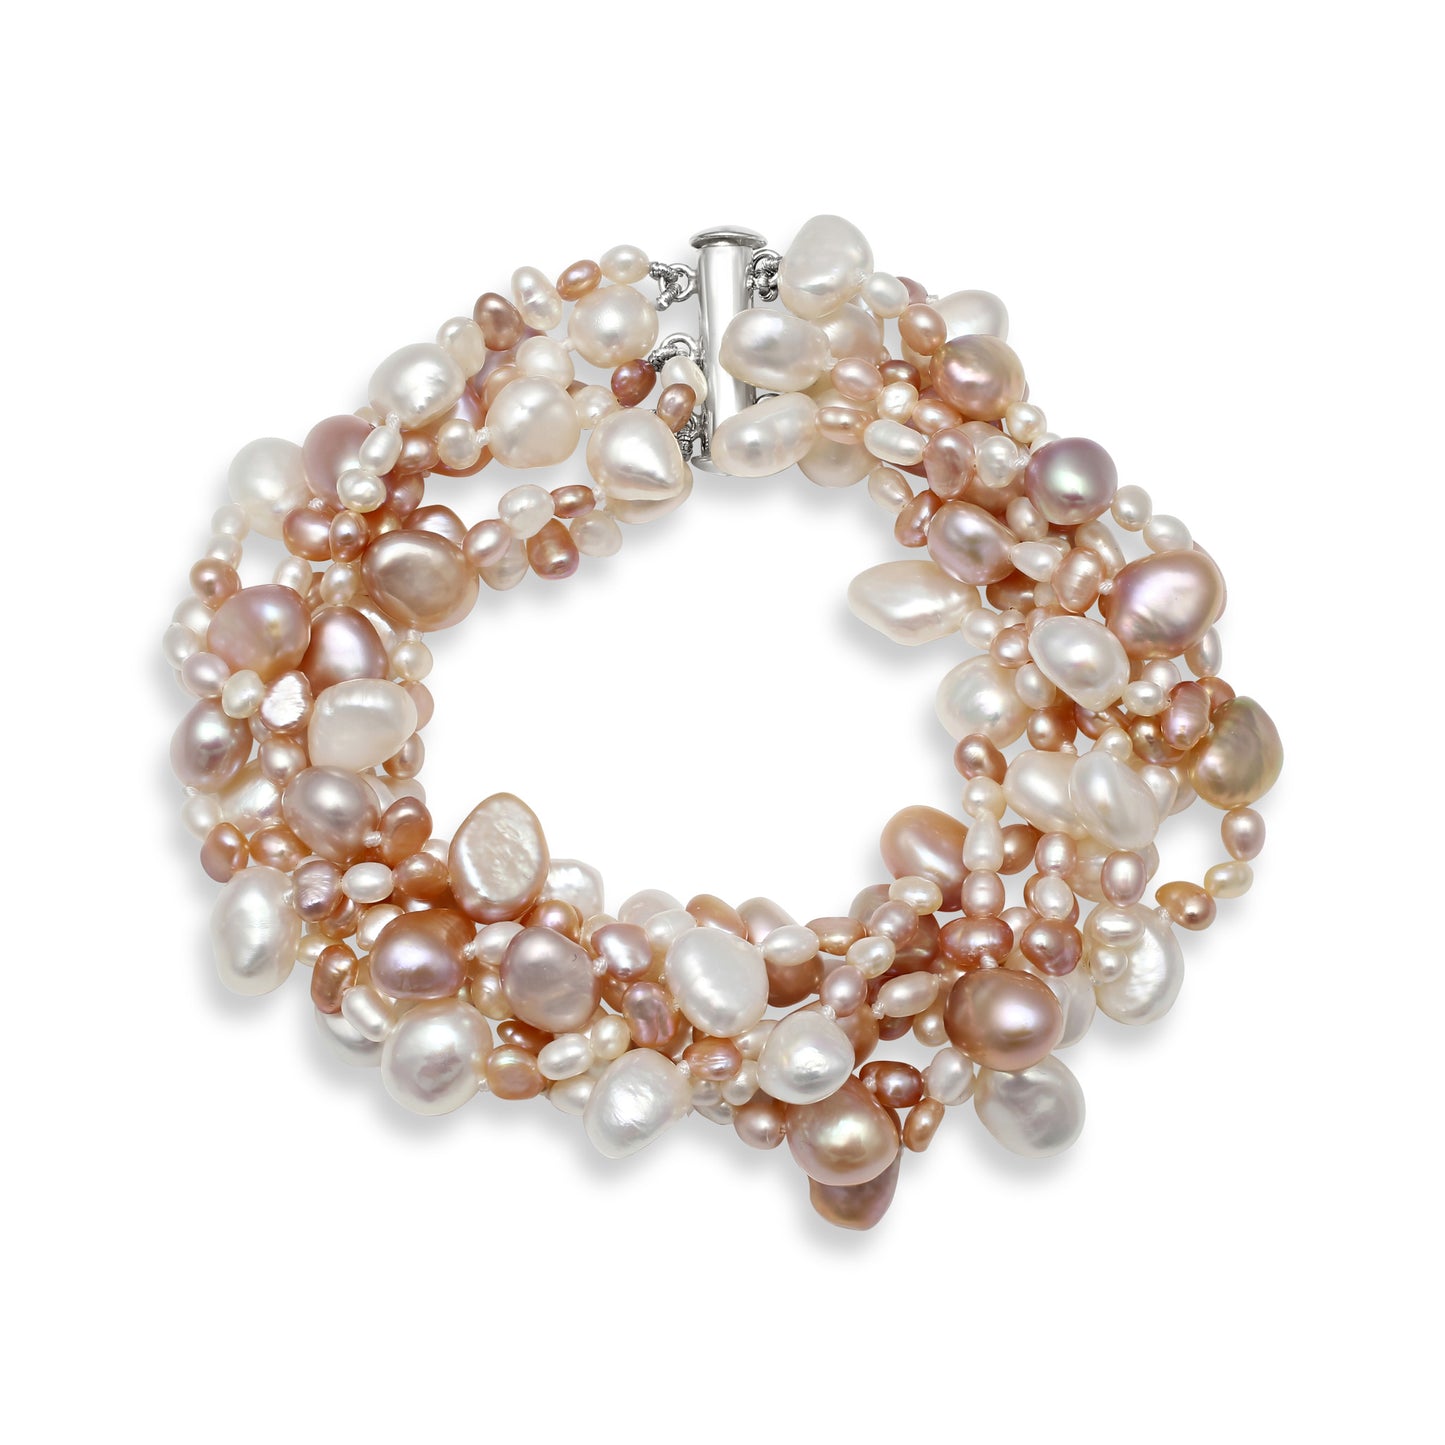 Margarita multi-strand pink & white cultured freshwater pearl bracelet